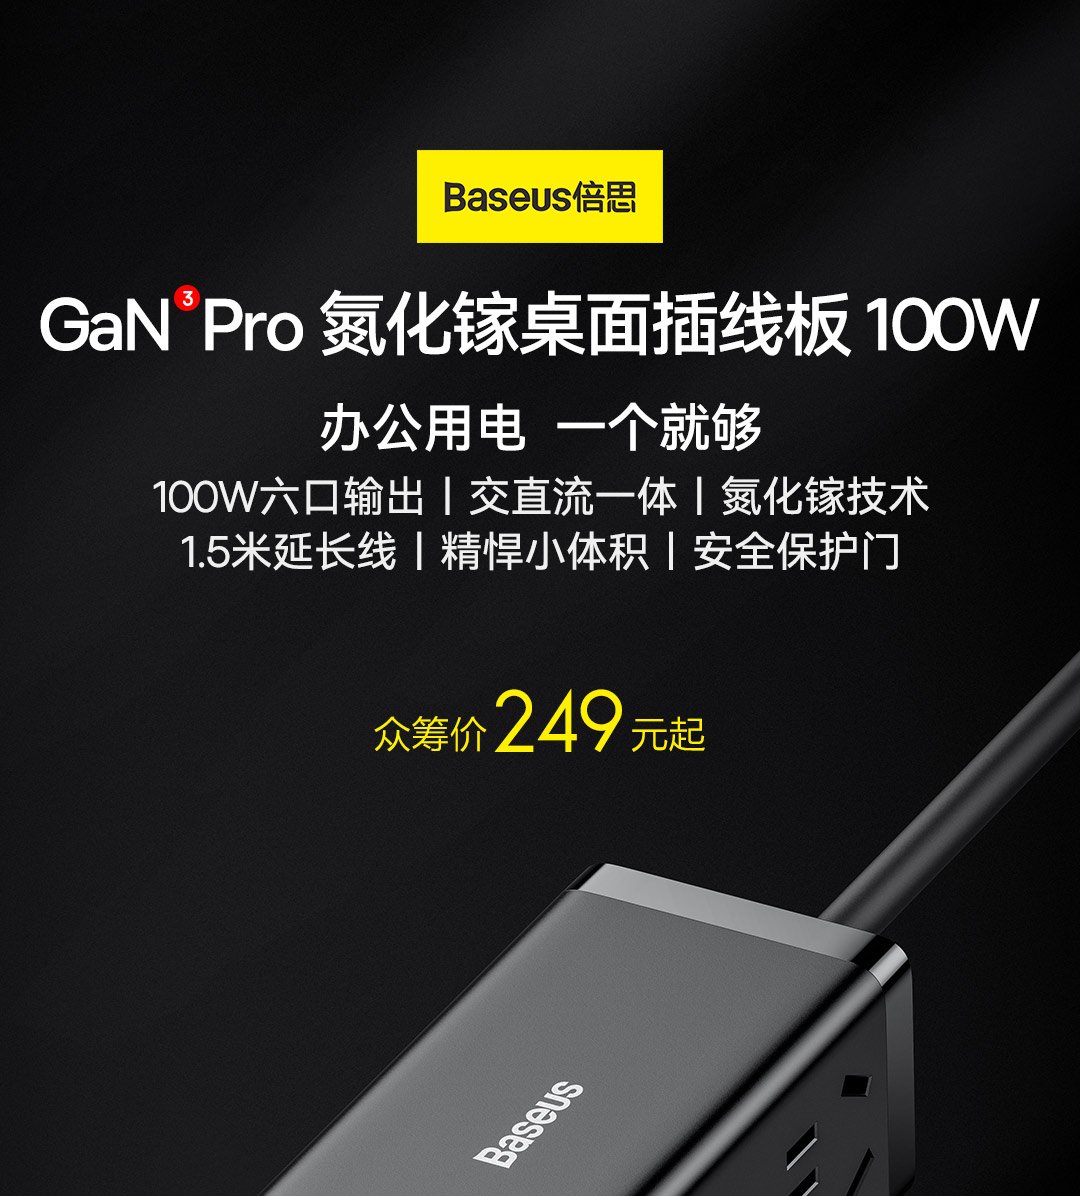 Baseus GaN3 Pro 100W Desktop Power Strip ra mắt trên Xiaomi Youpin